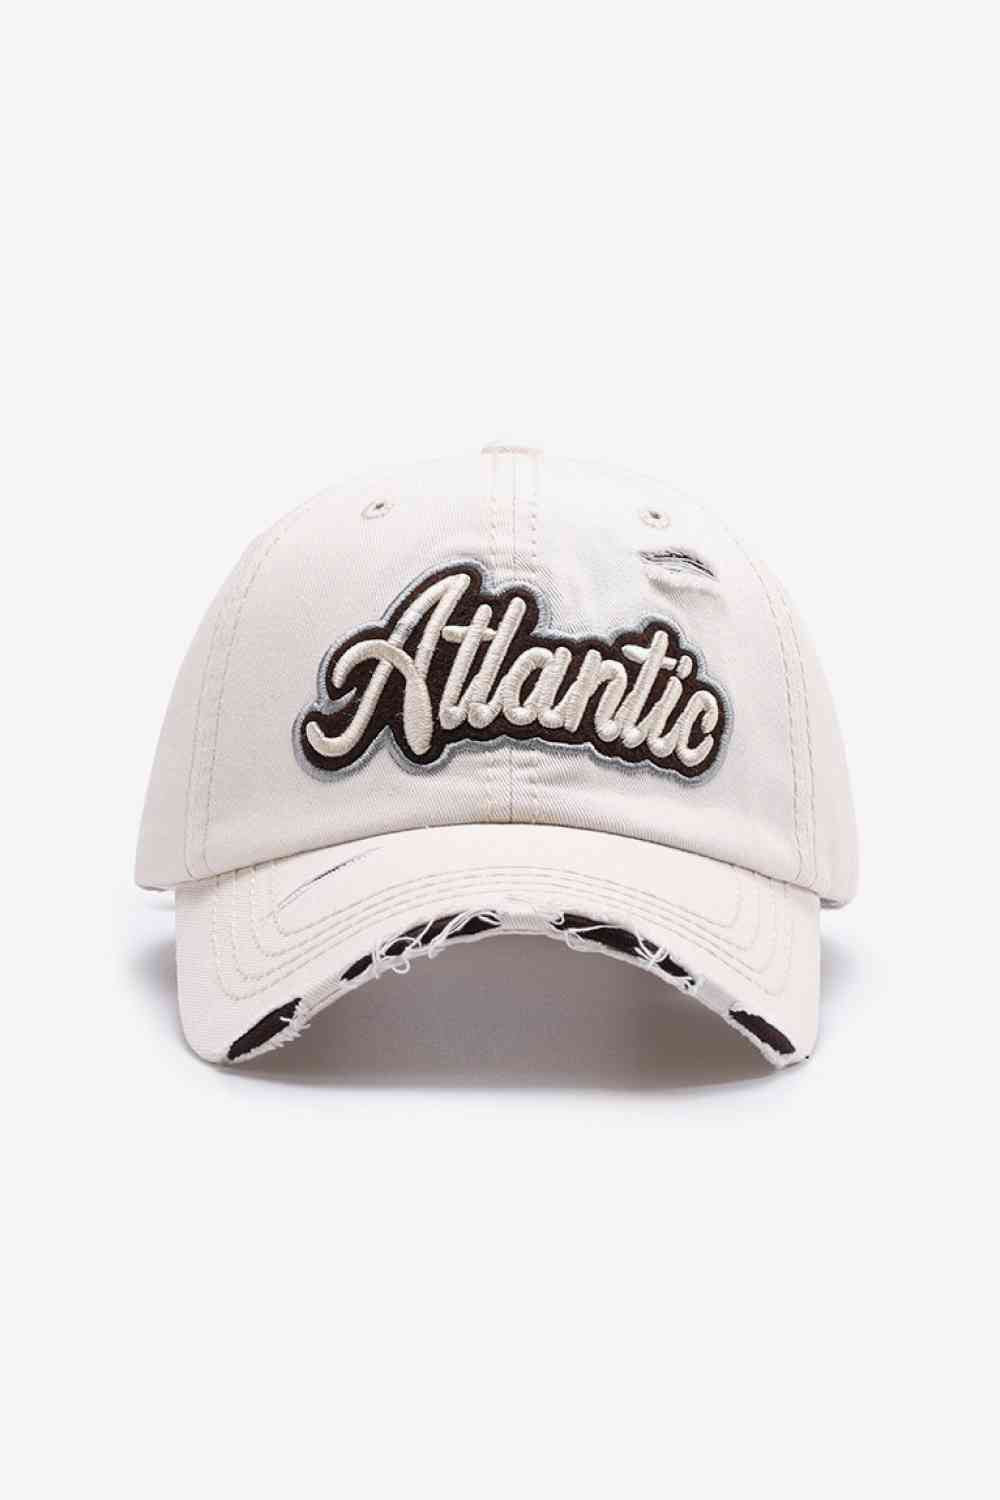 ATLANTIC Graphic Distressed Baseball Cap Cream One Size